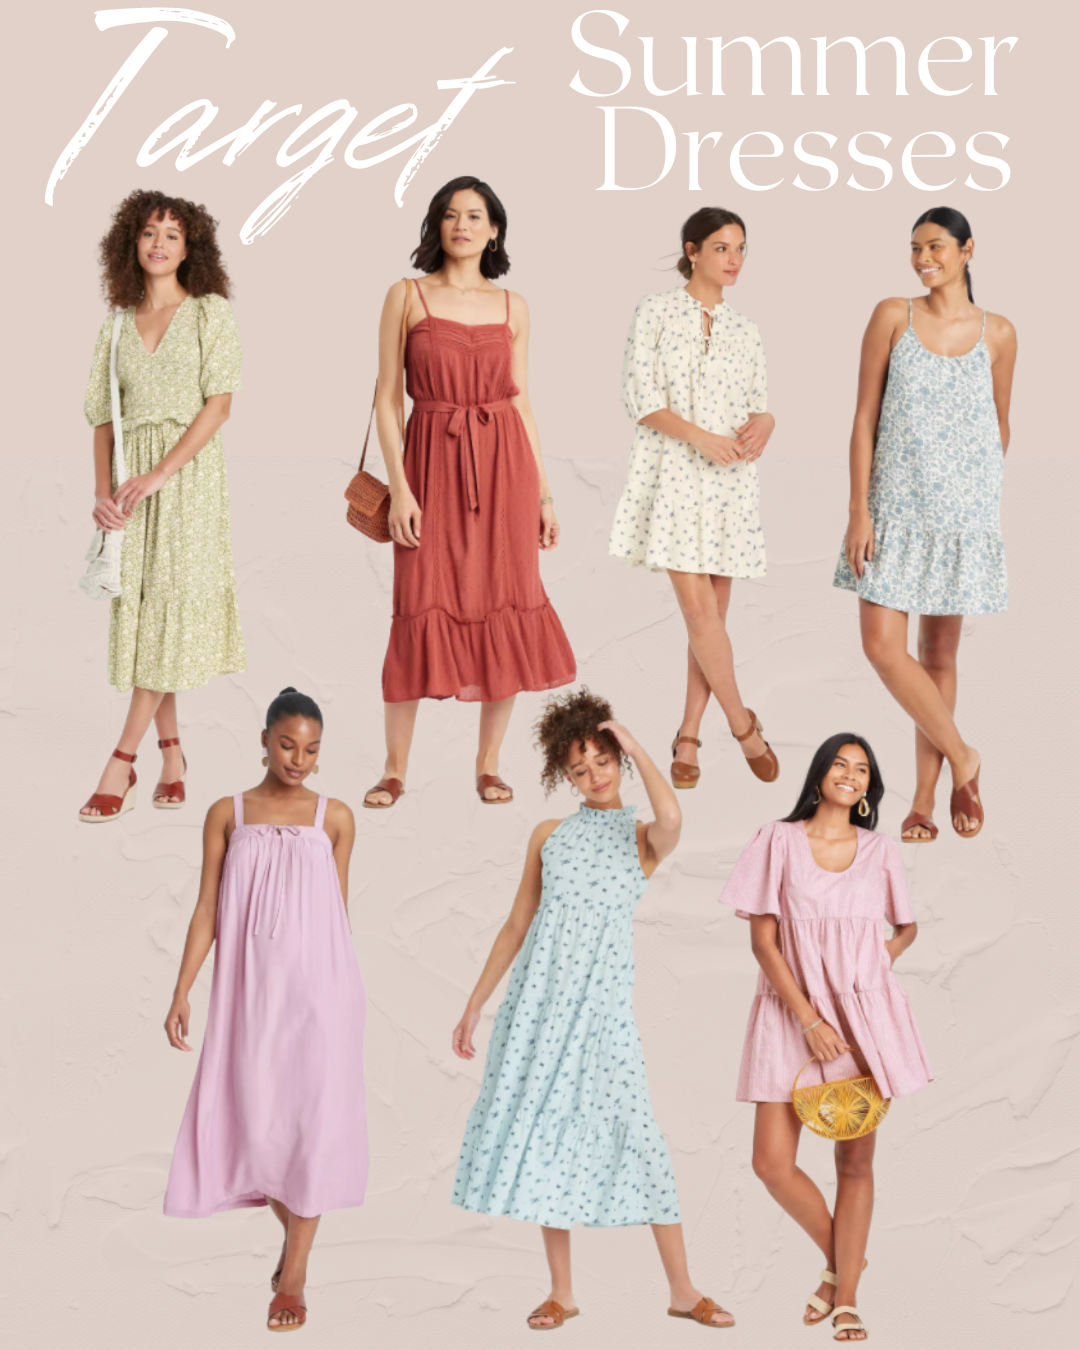 Target Summer Dresses 2021 - Affordable by Amanda